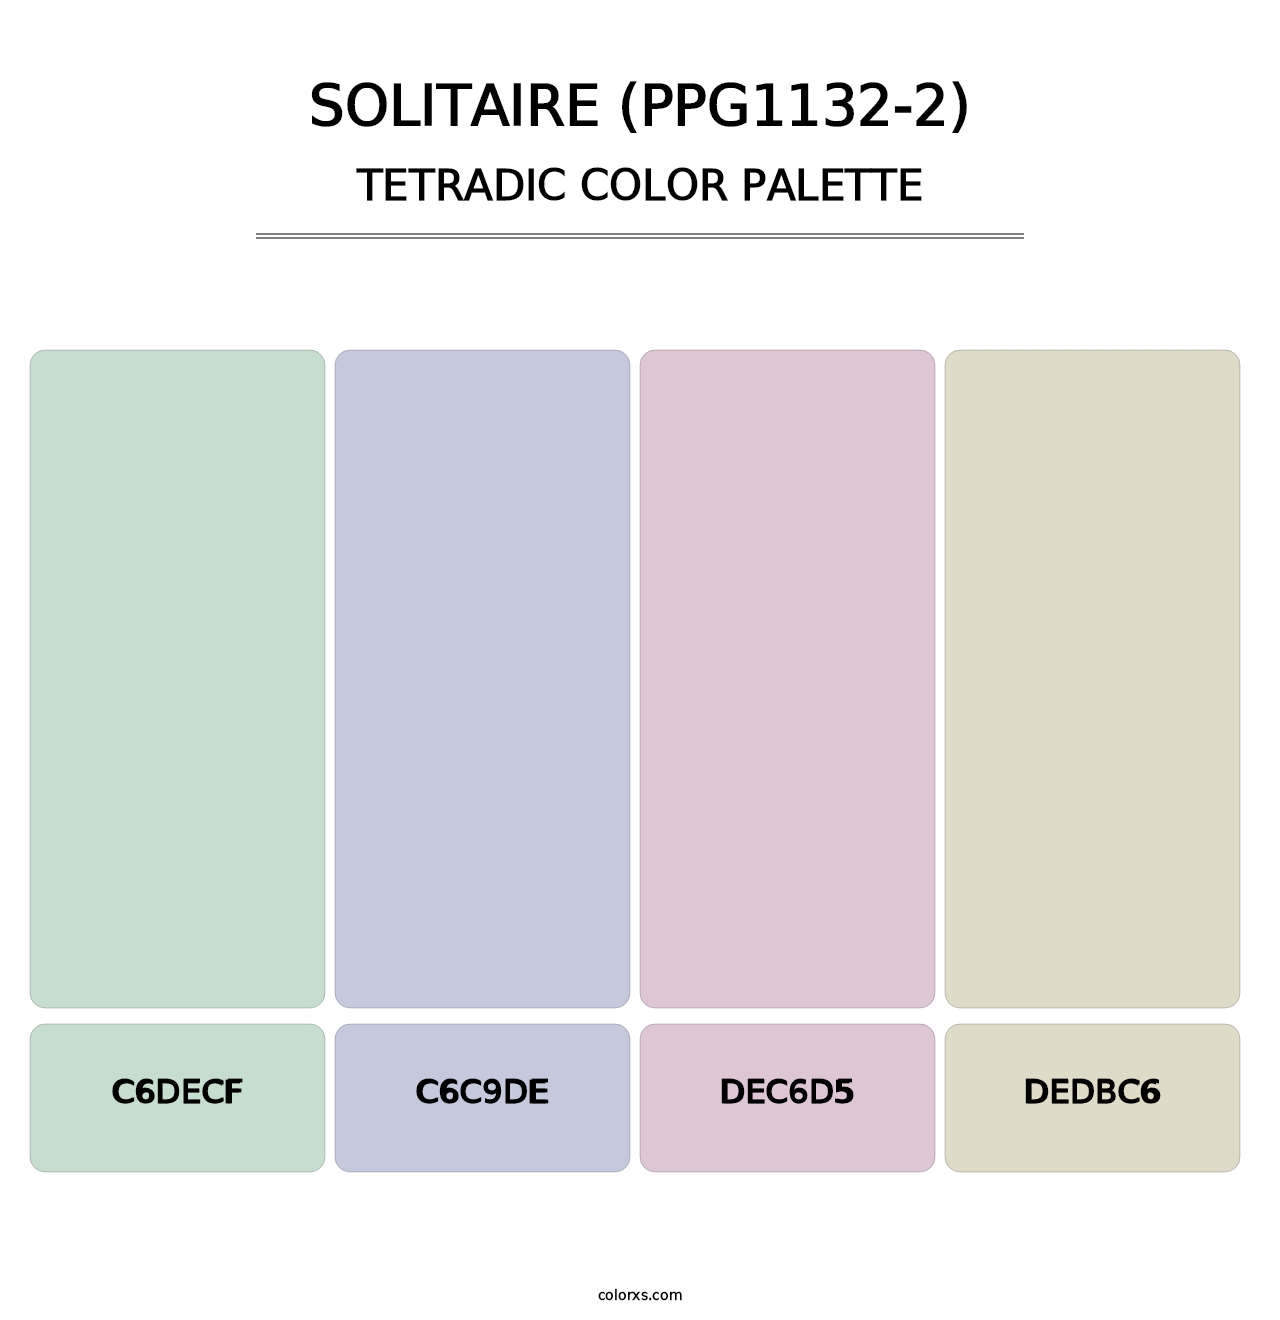 Solitaire (PPG1132-2) - Tetradic Color Palette